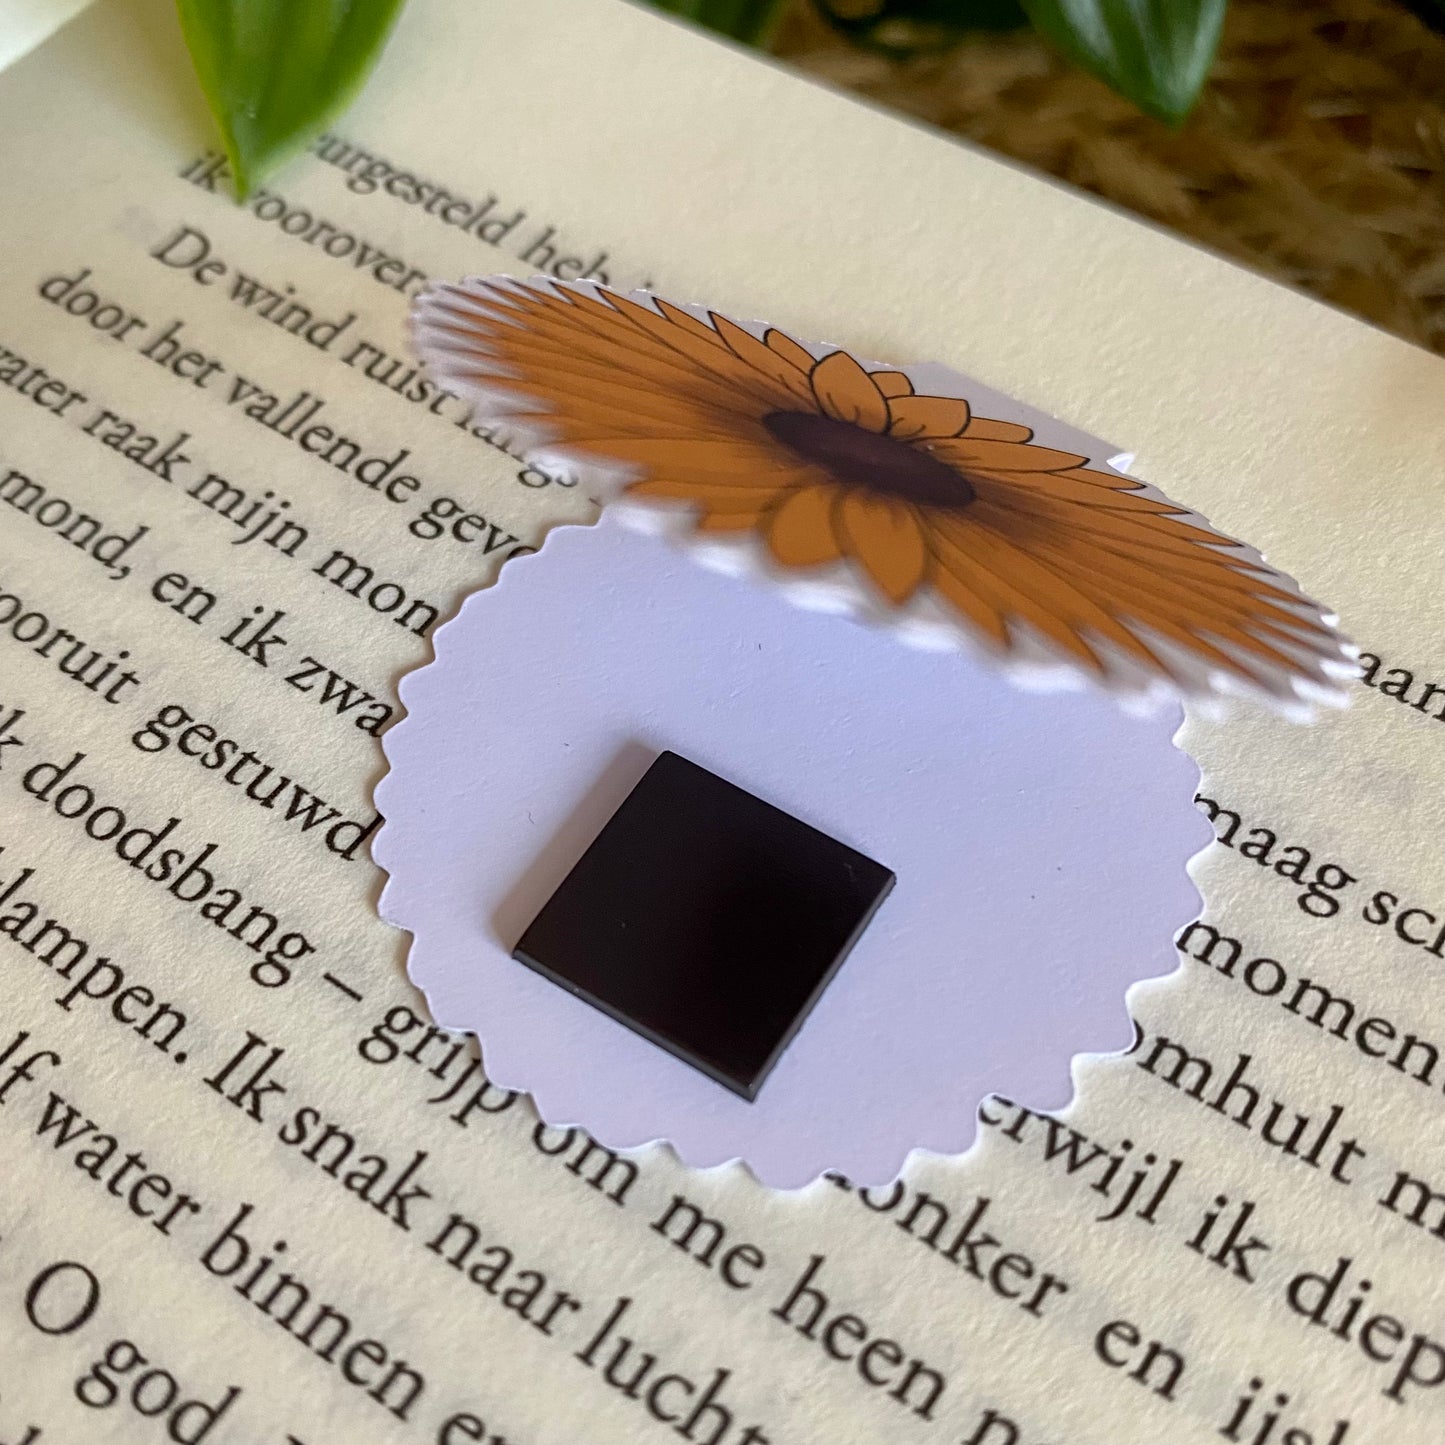 Sunflower | Magnetic bookmark